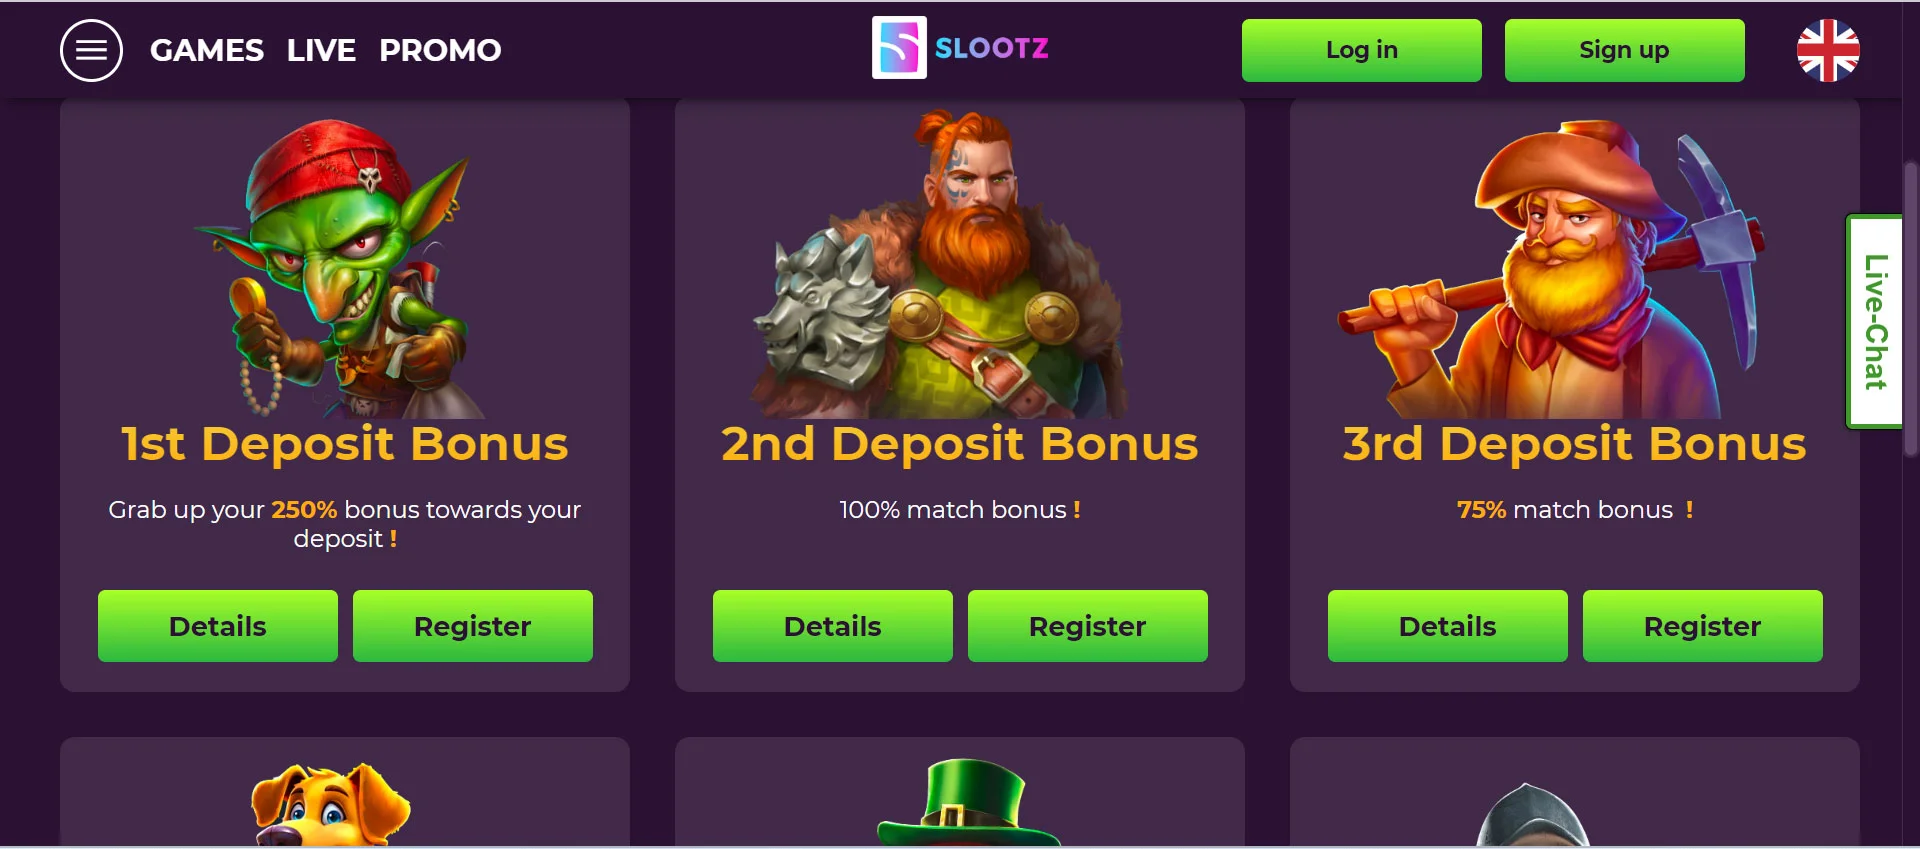 Slootz Casino Promotions